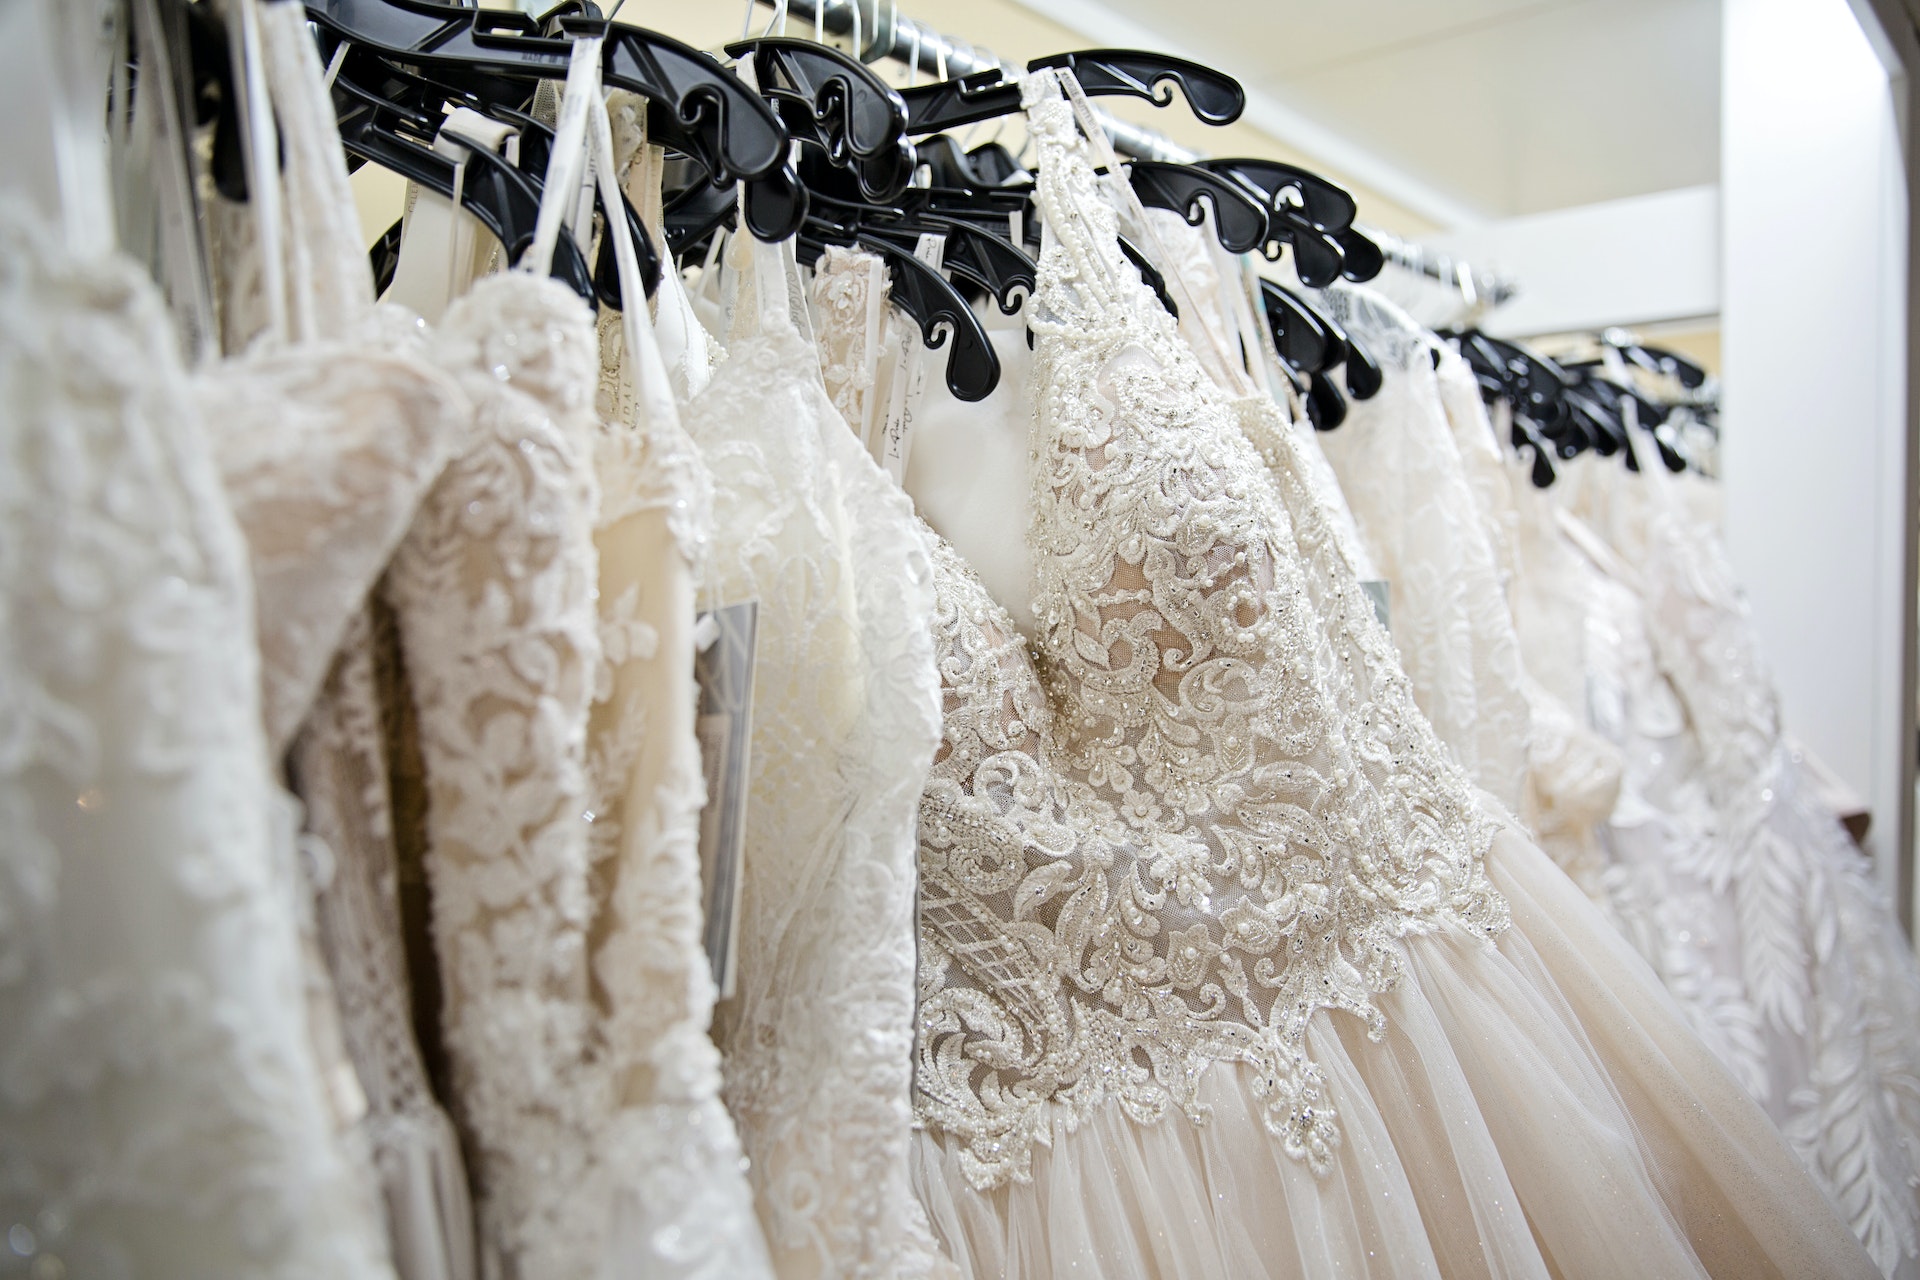 Wedding dresses hanging on a cloth rack | Source: Pexels